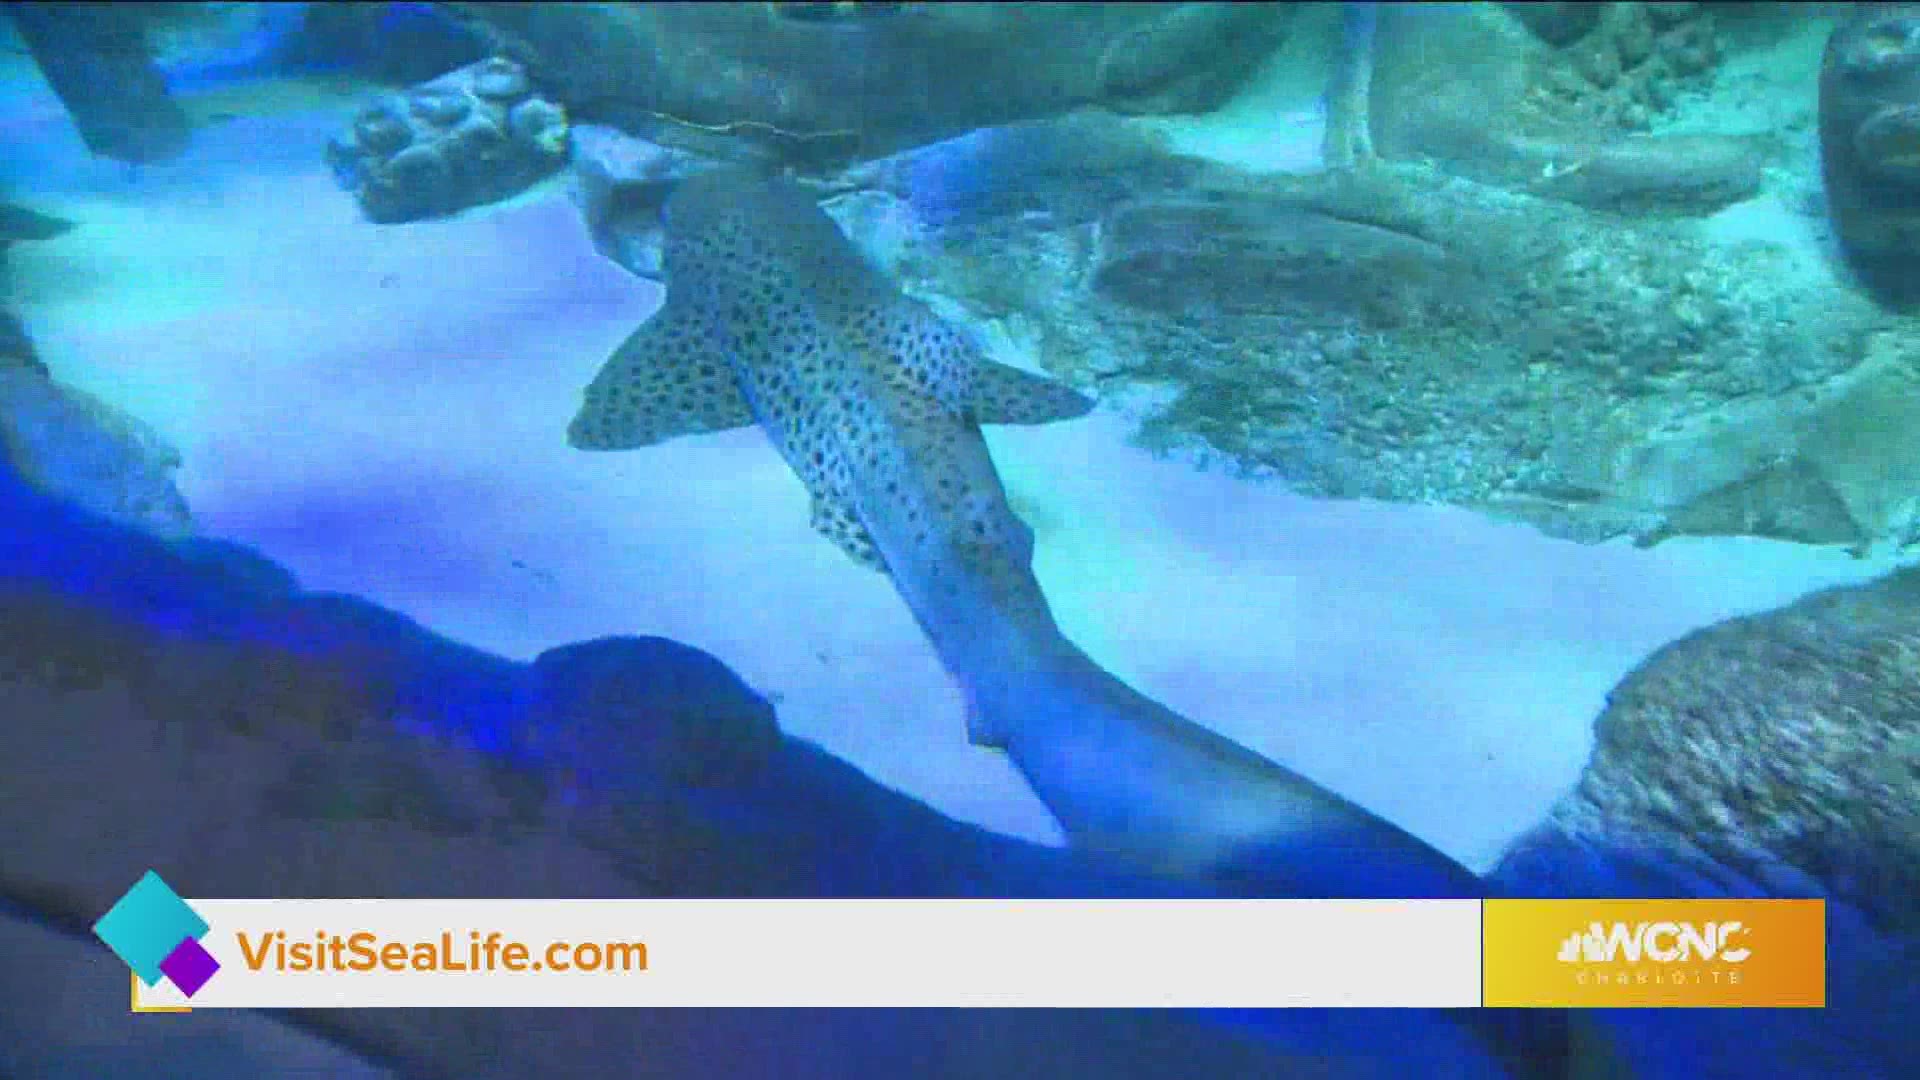 SeaLife Aquarium celebrates shark week